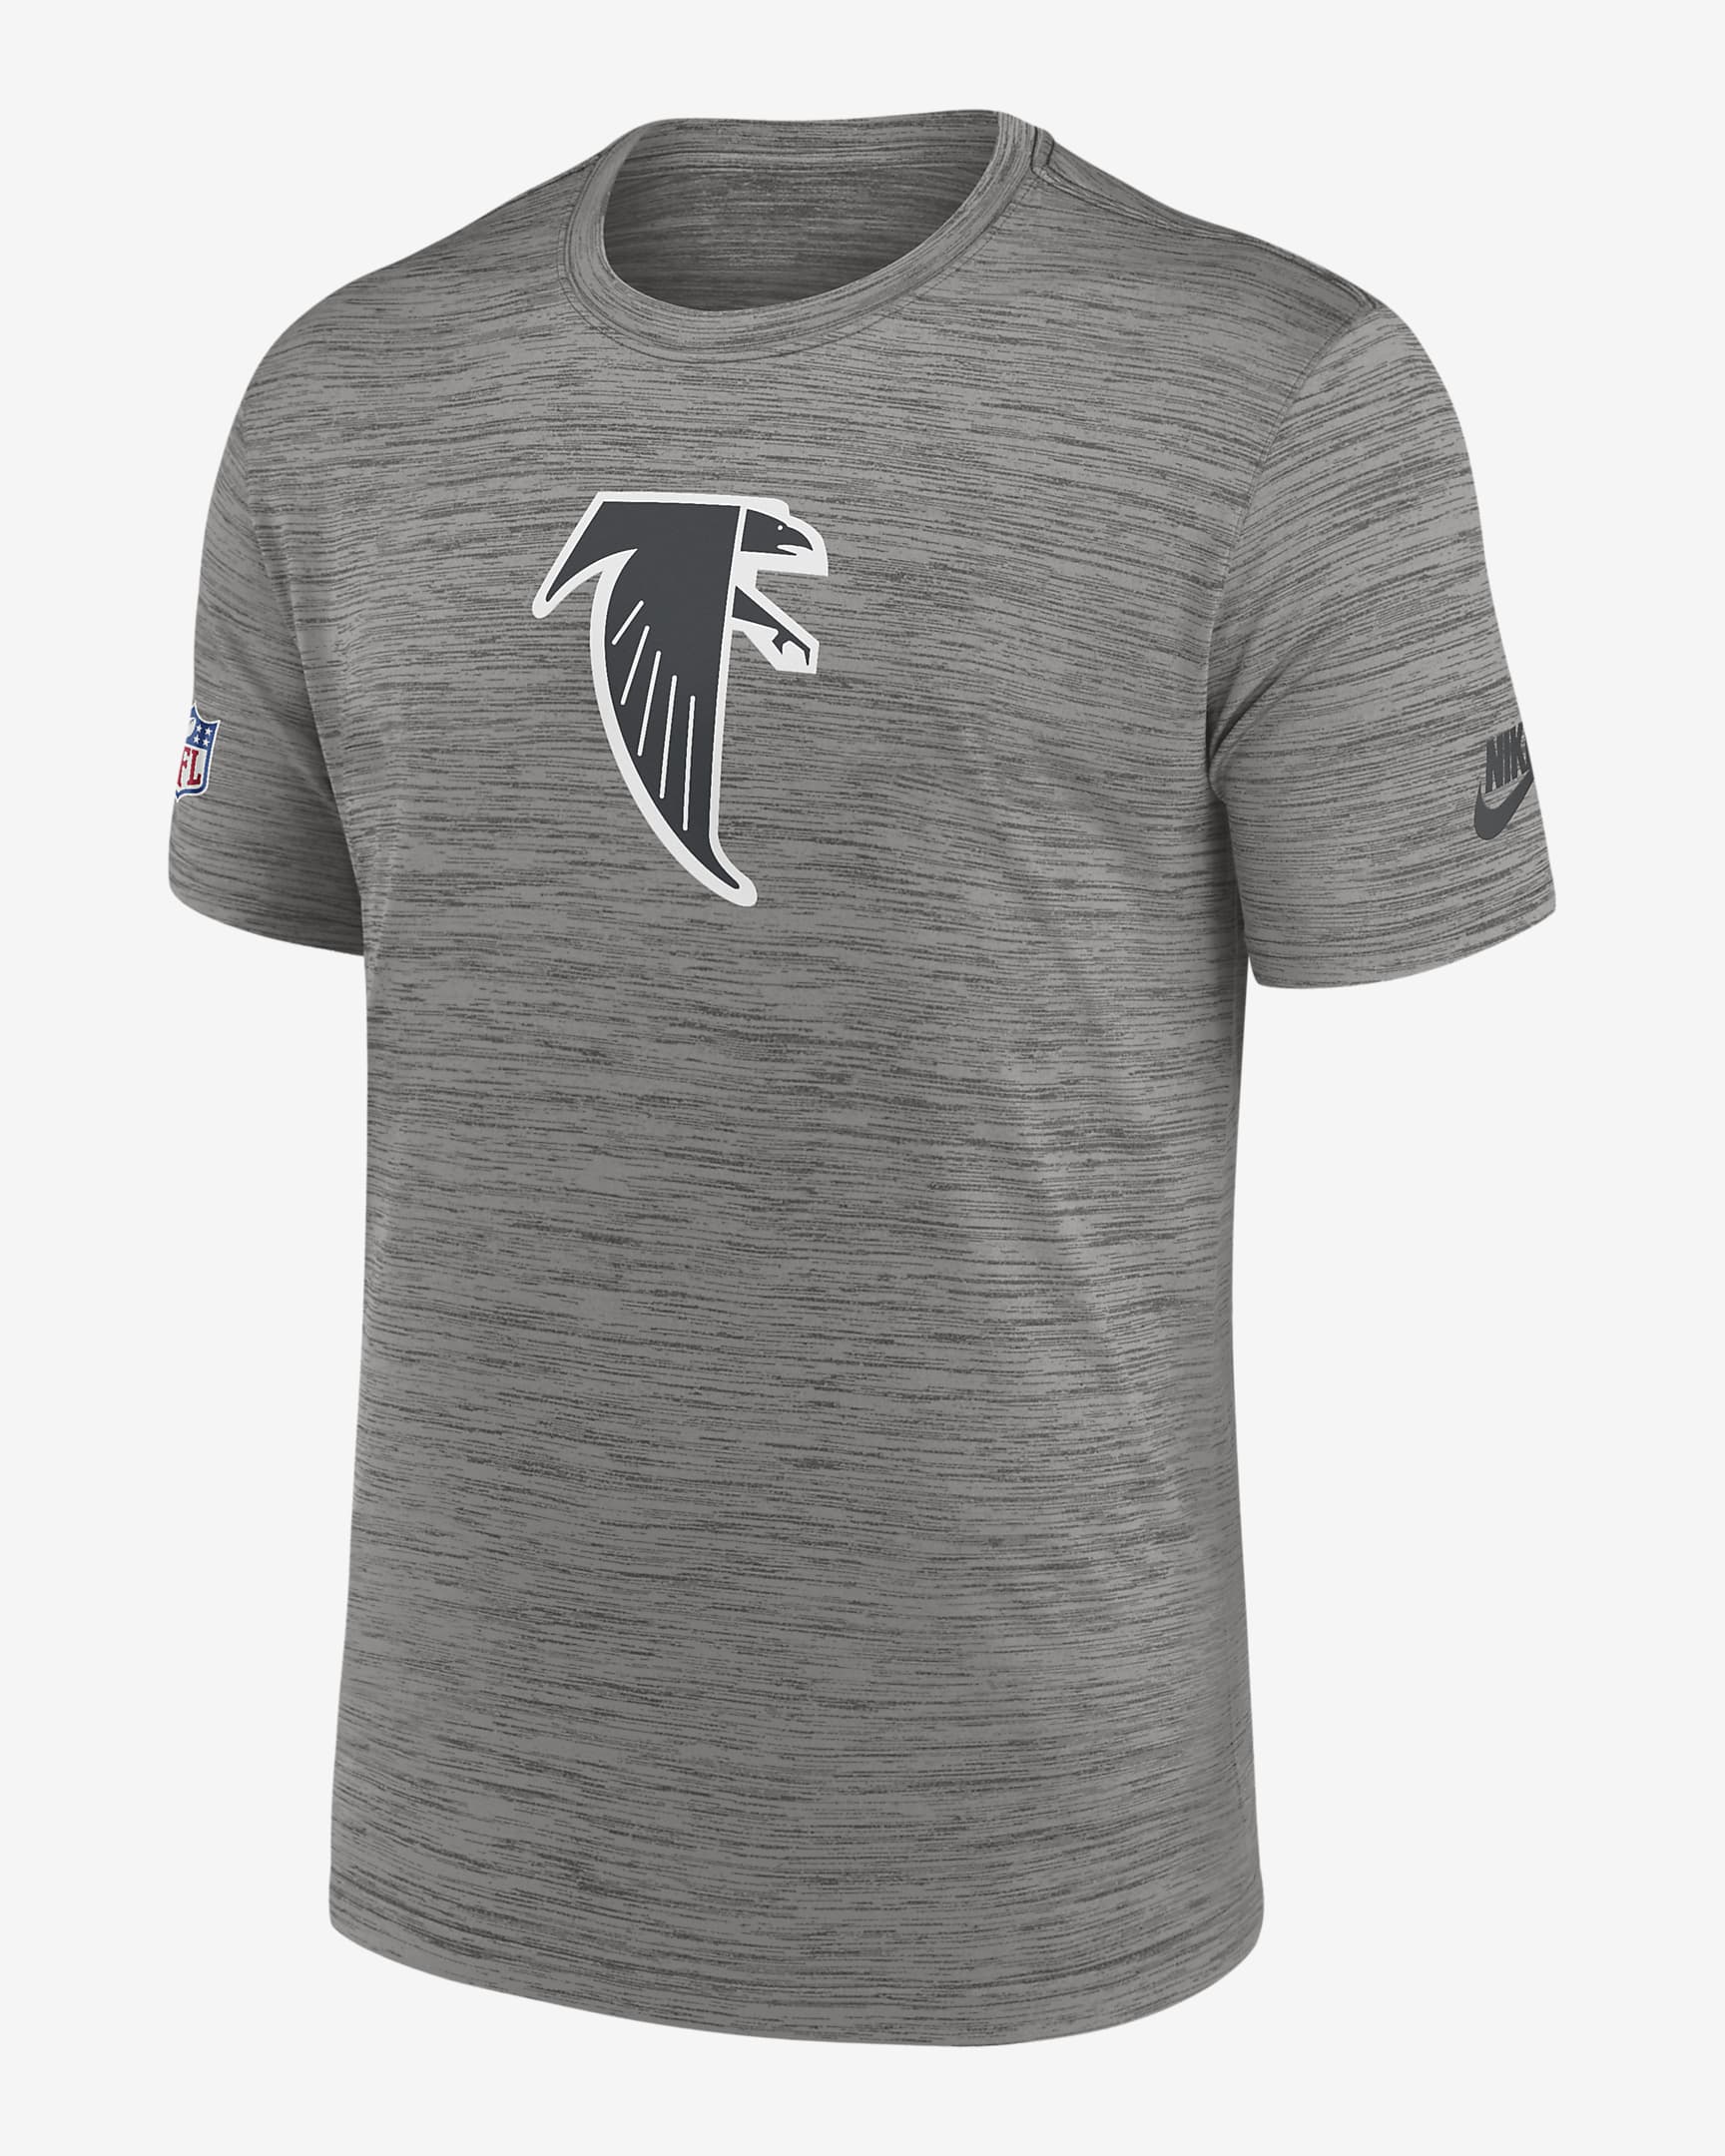 Playera para hombre Nike Dri-FIT Team (NFL Atlanta Falcons). Nike.com